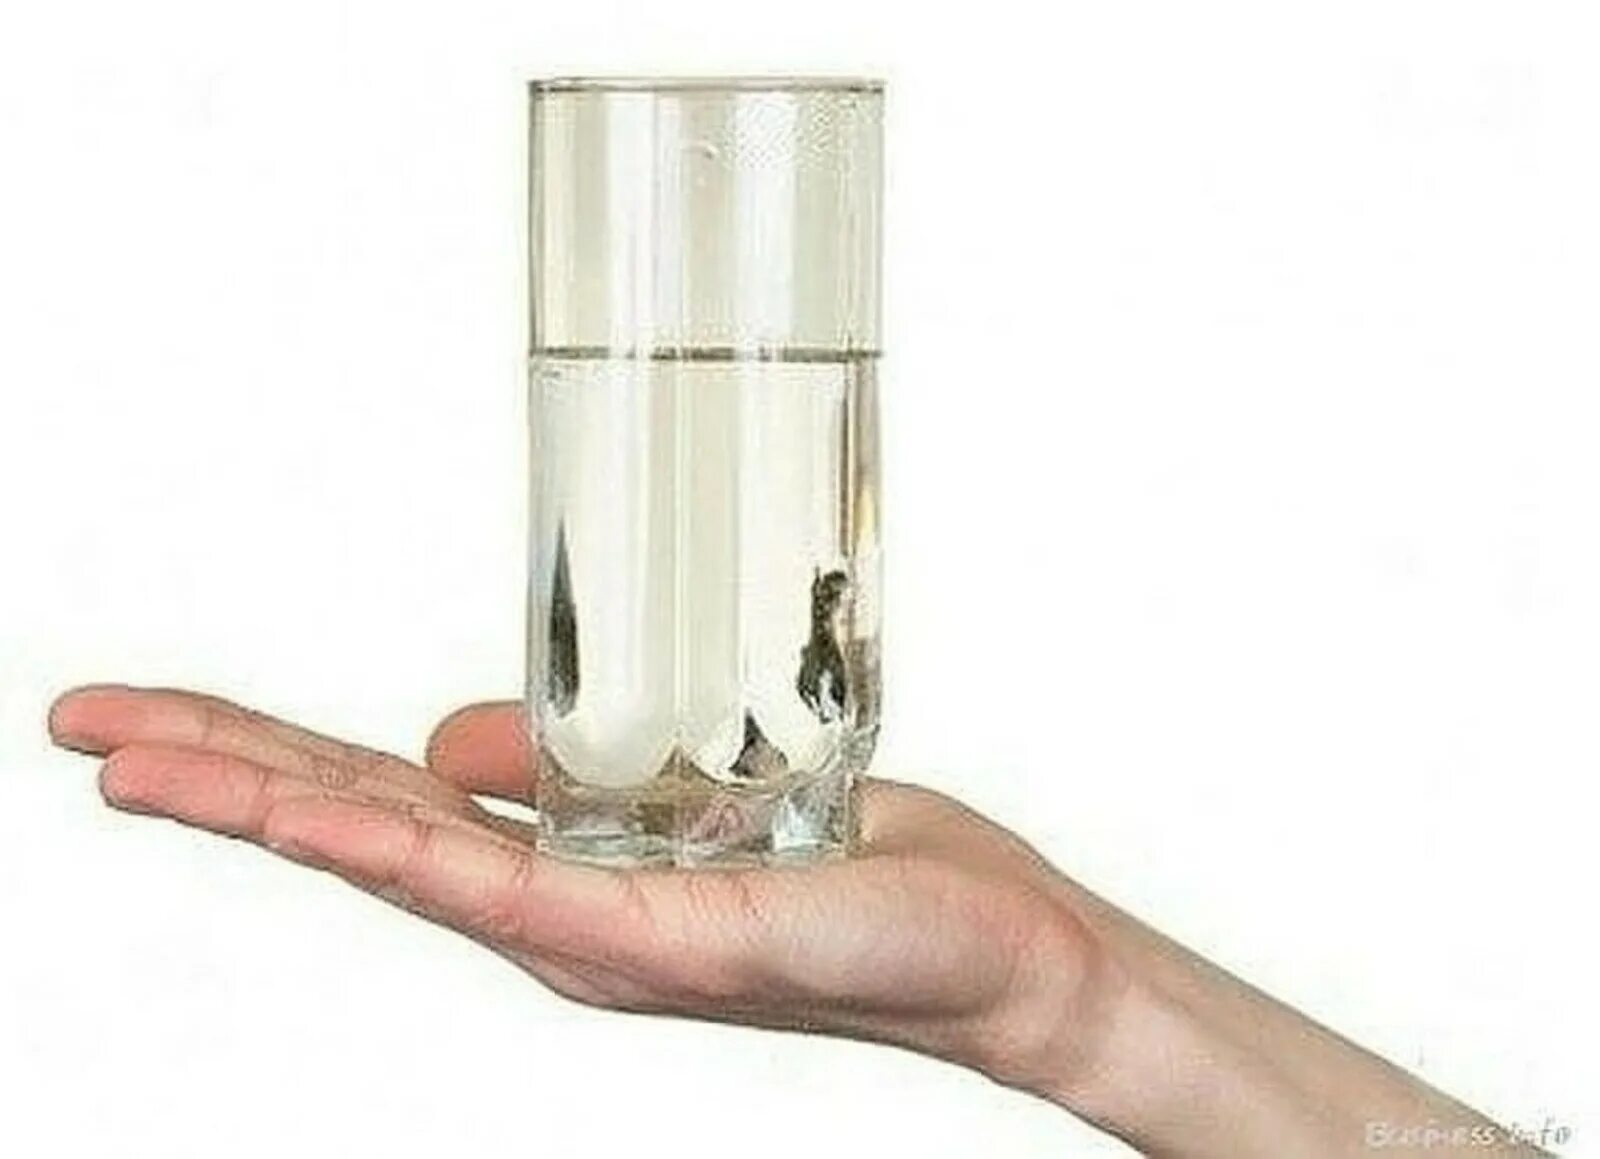 Наливаем воды полстакана. Стакан воды. Прозрачная вода в стакане. Стакан воды в руке. Стакан в вытянутой руке.